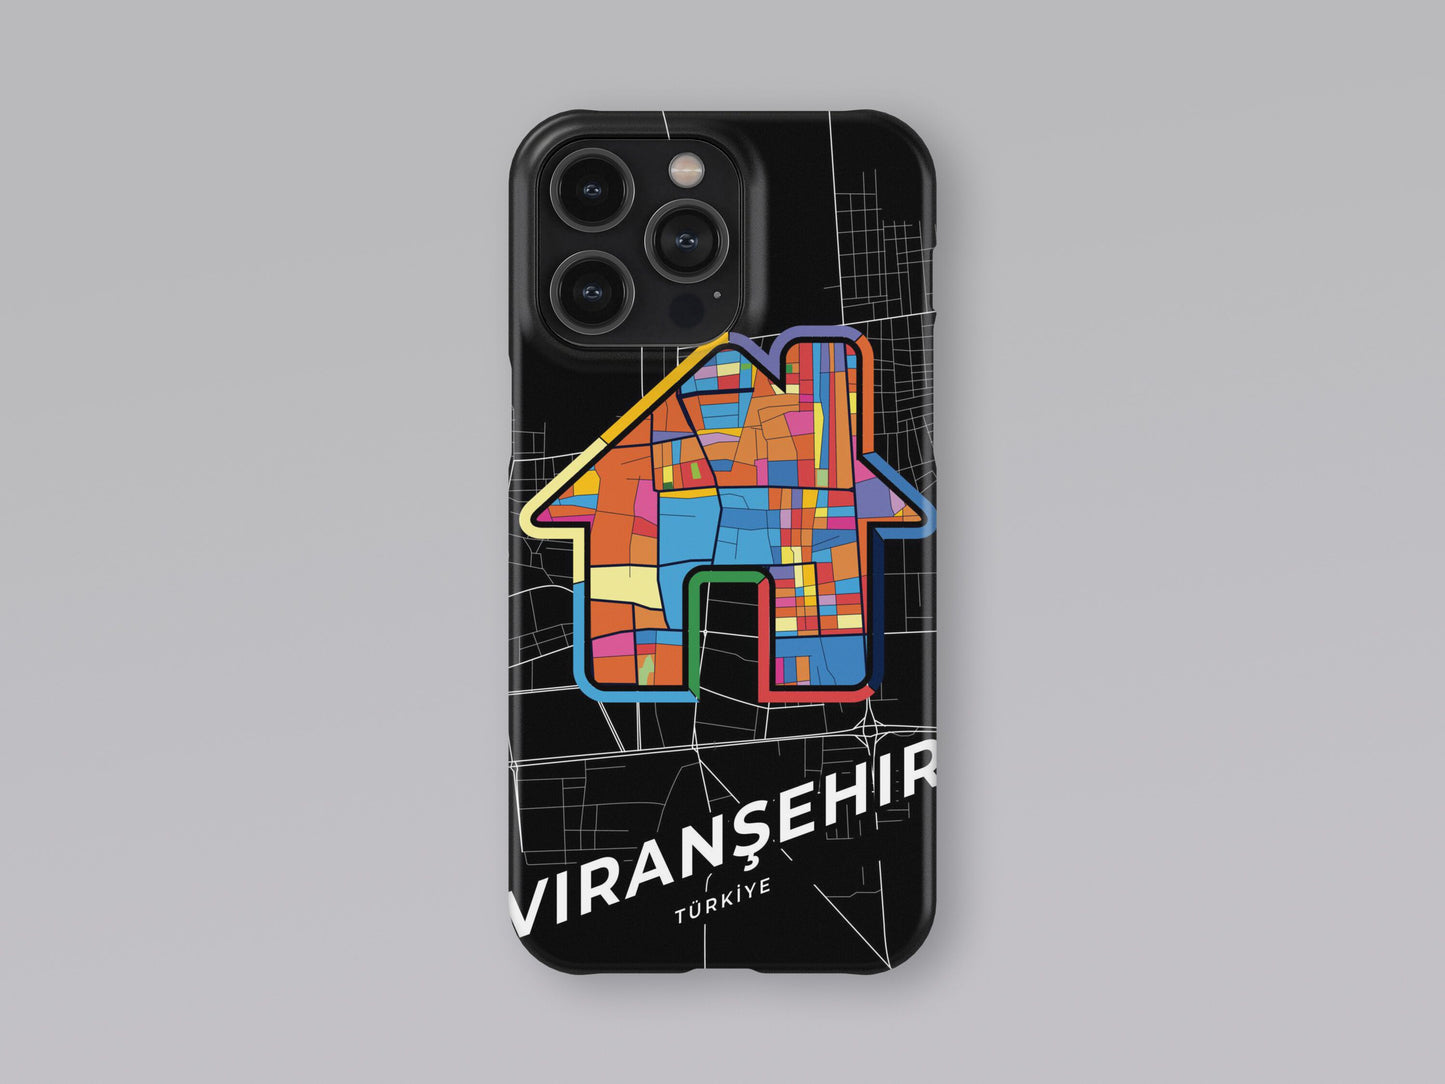 Viranşehir Turkey slim phone case with colorful icon 3